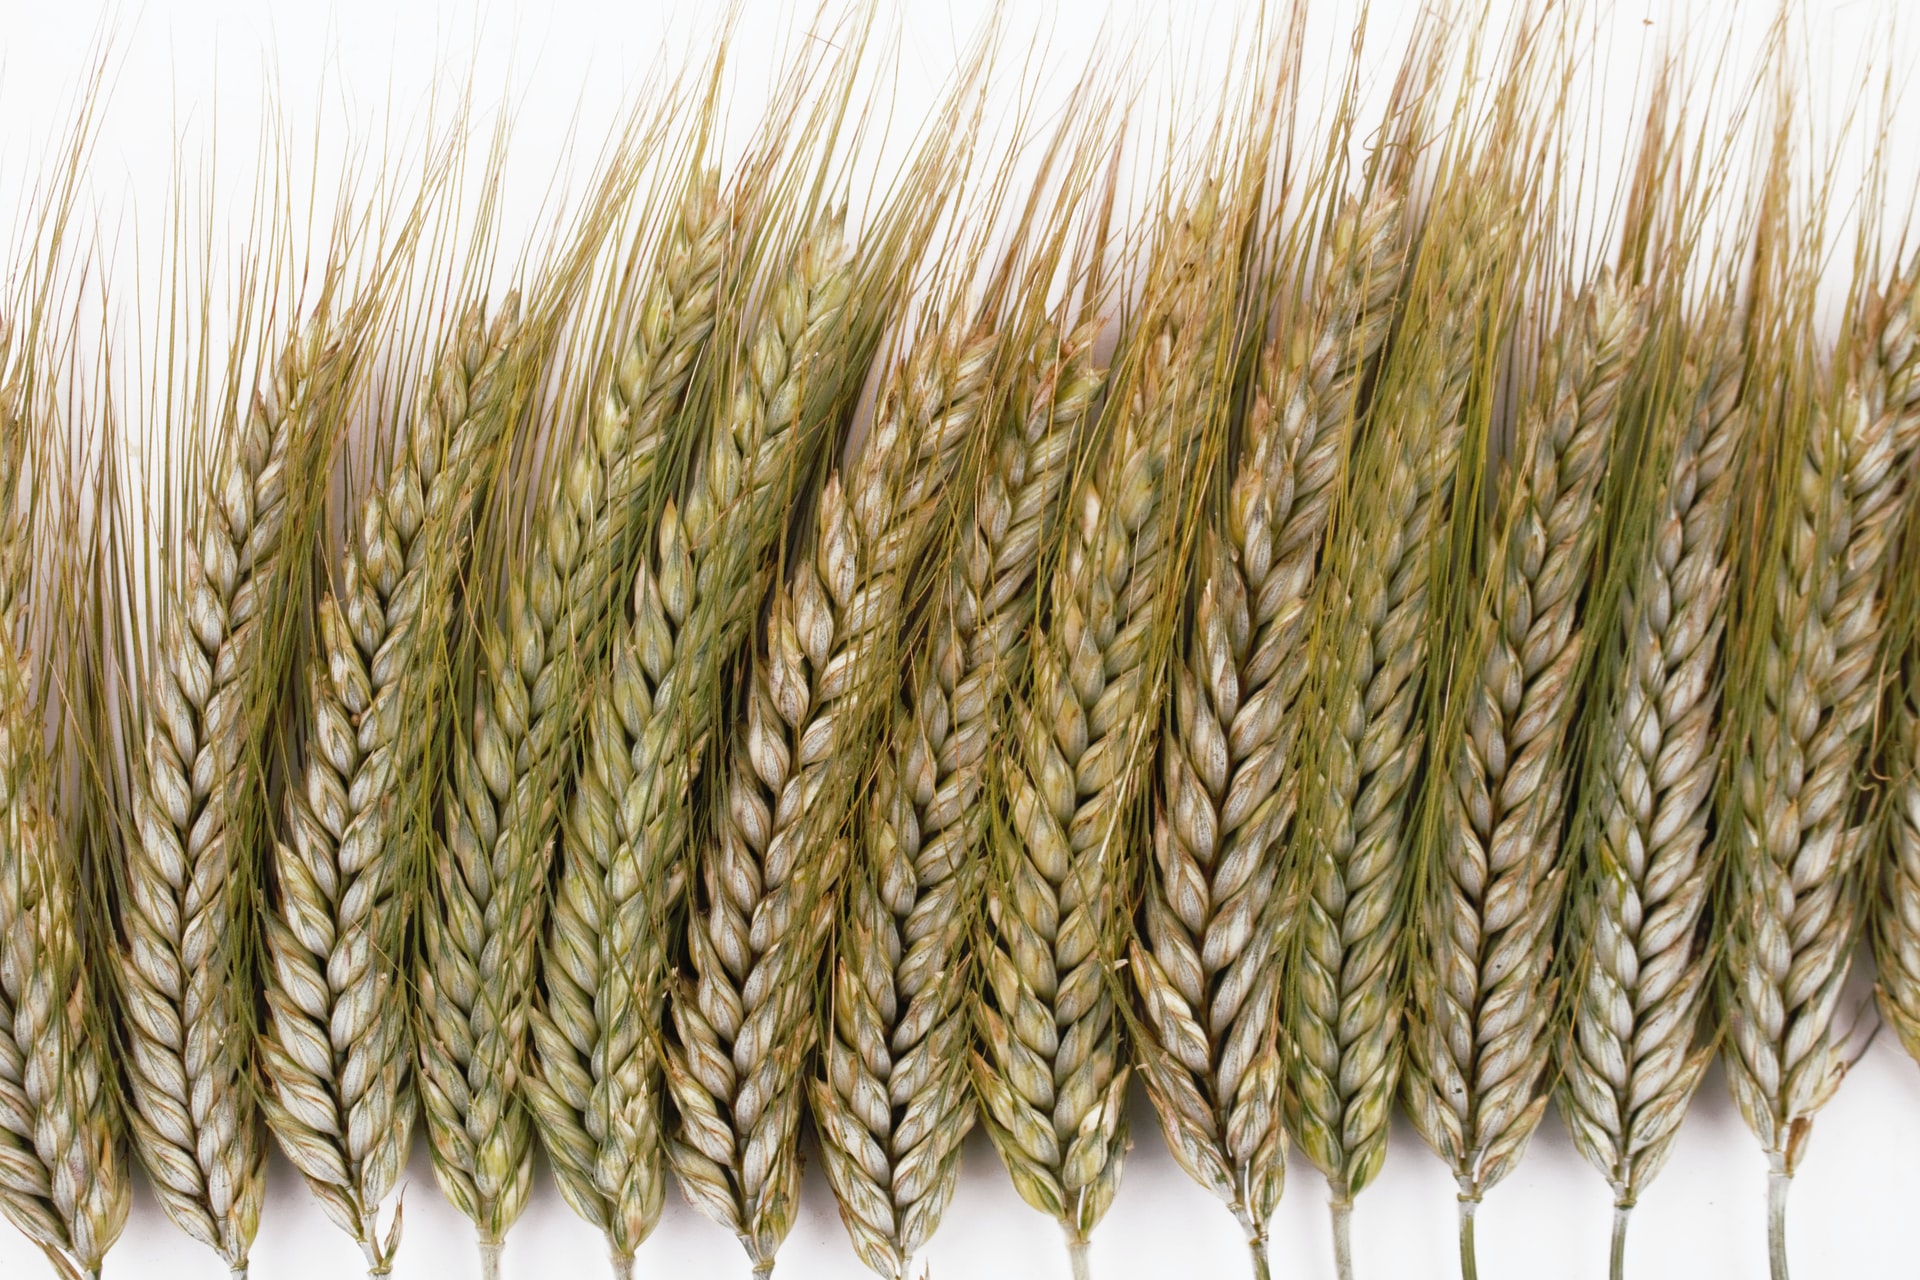 Durum wheat: sustainable and innovative genetic improvement